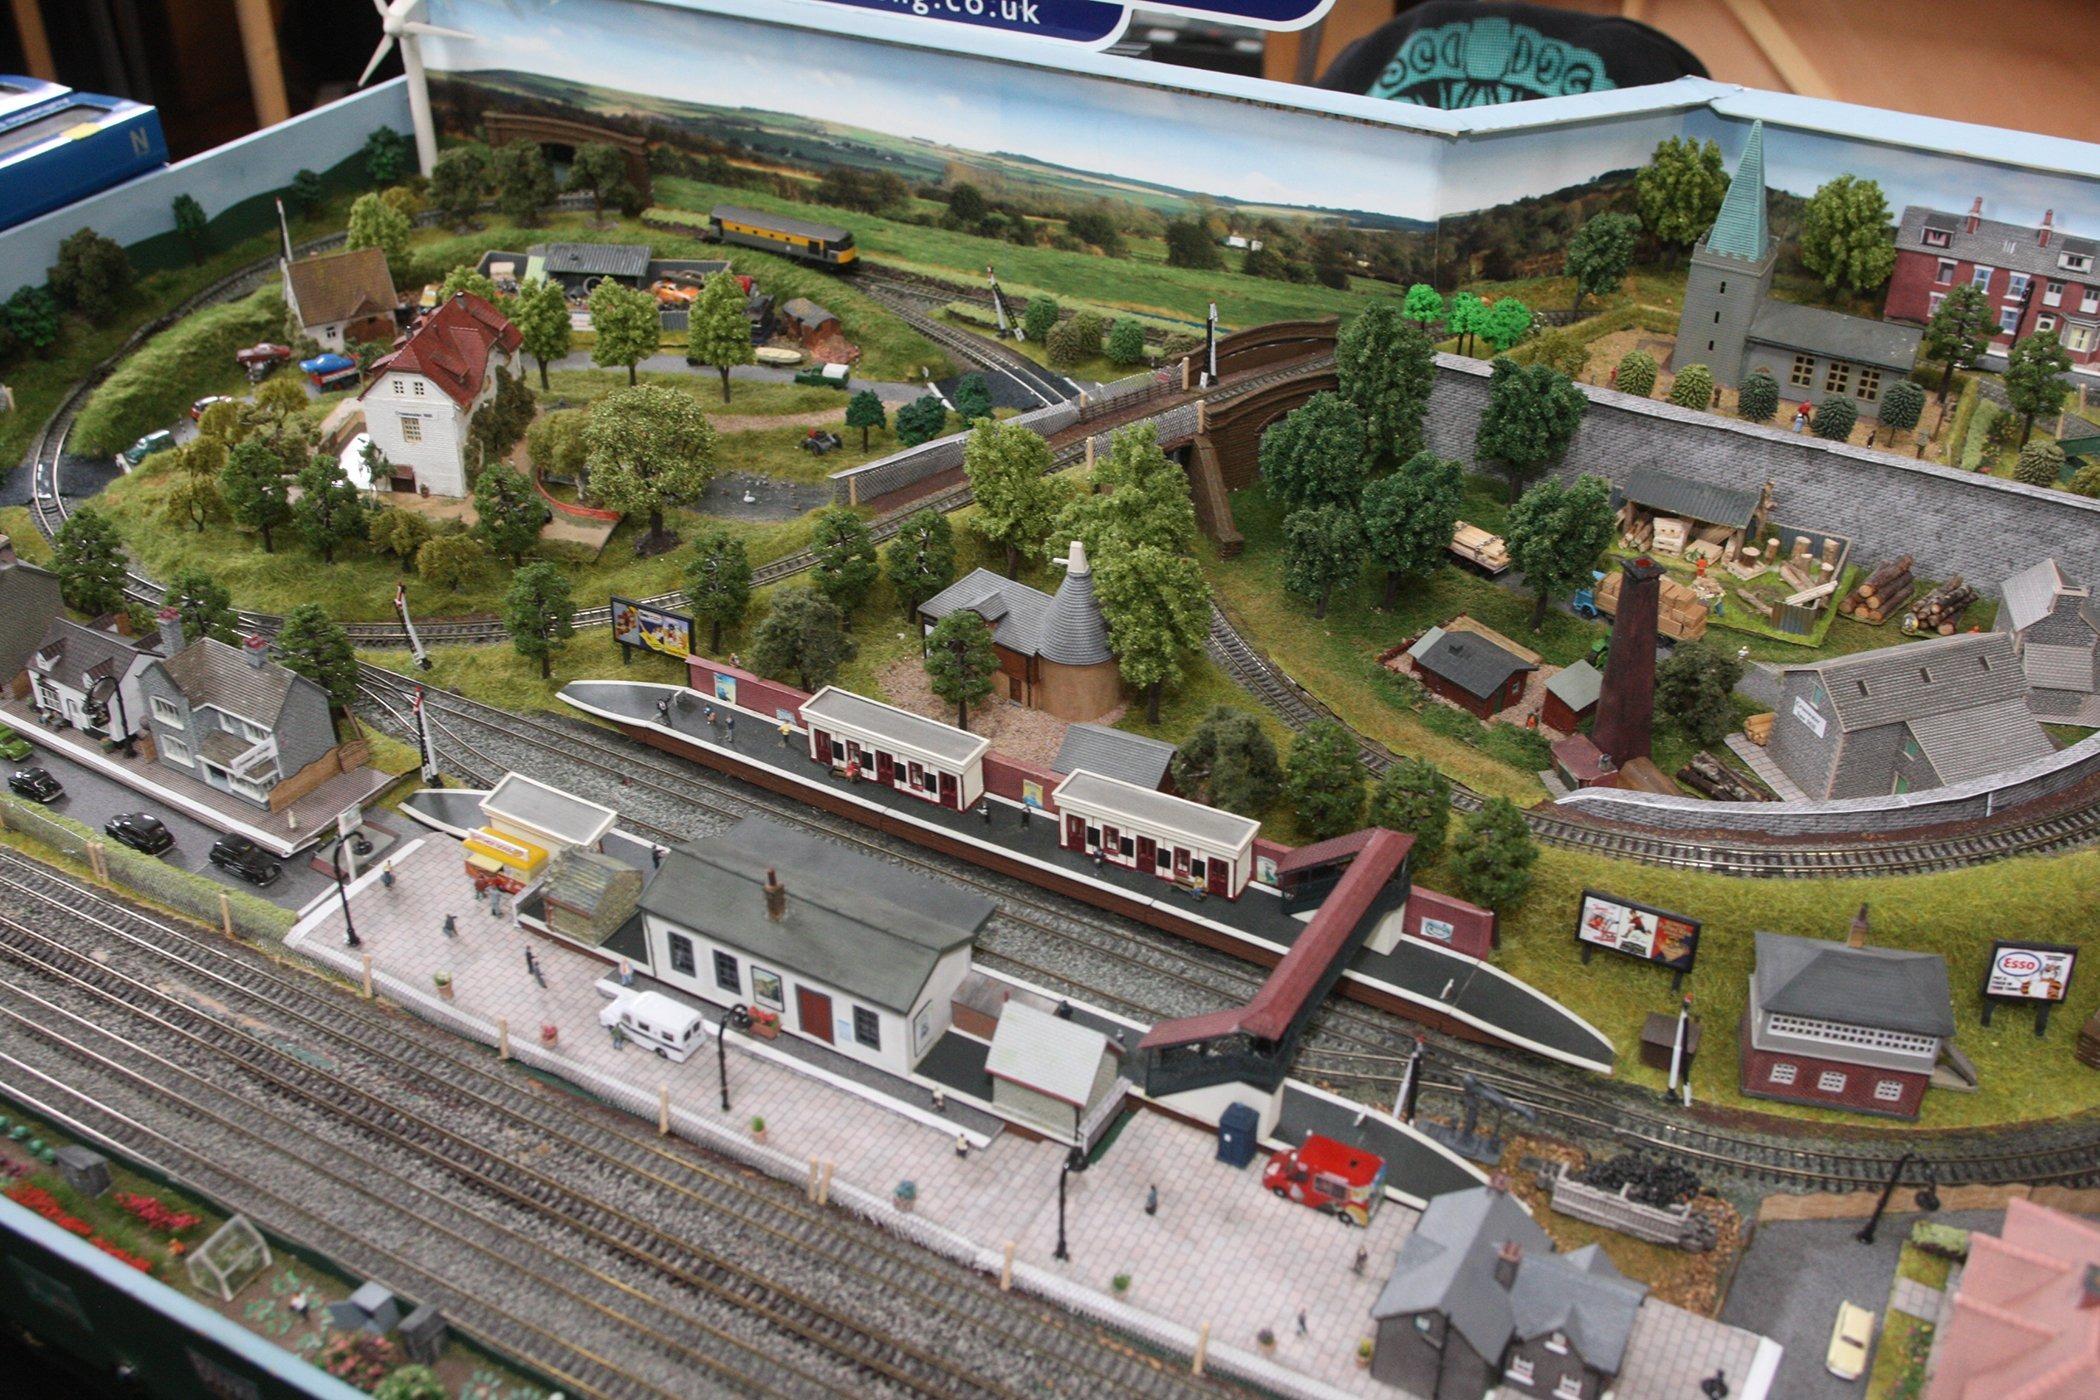 West Sussex N Gauge Model Railway Club builds its biggest layout yet. Photo by Derek Martin DM19111014a